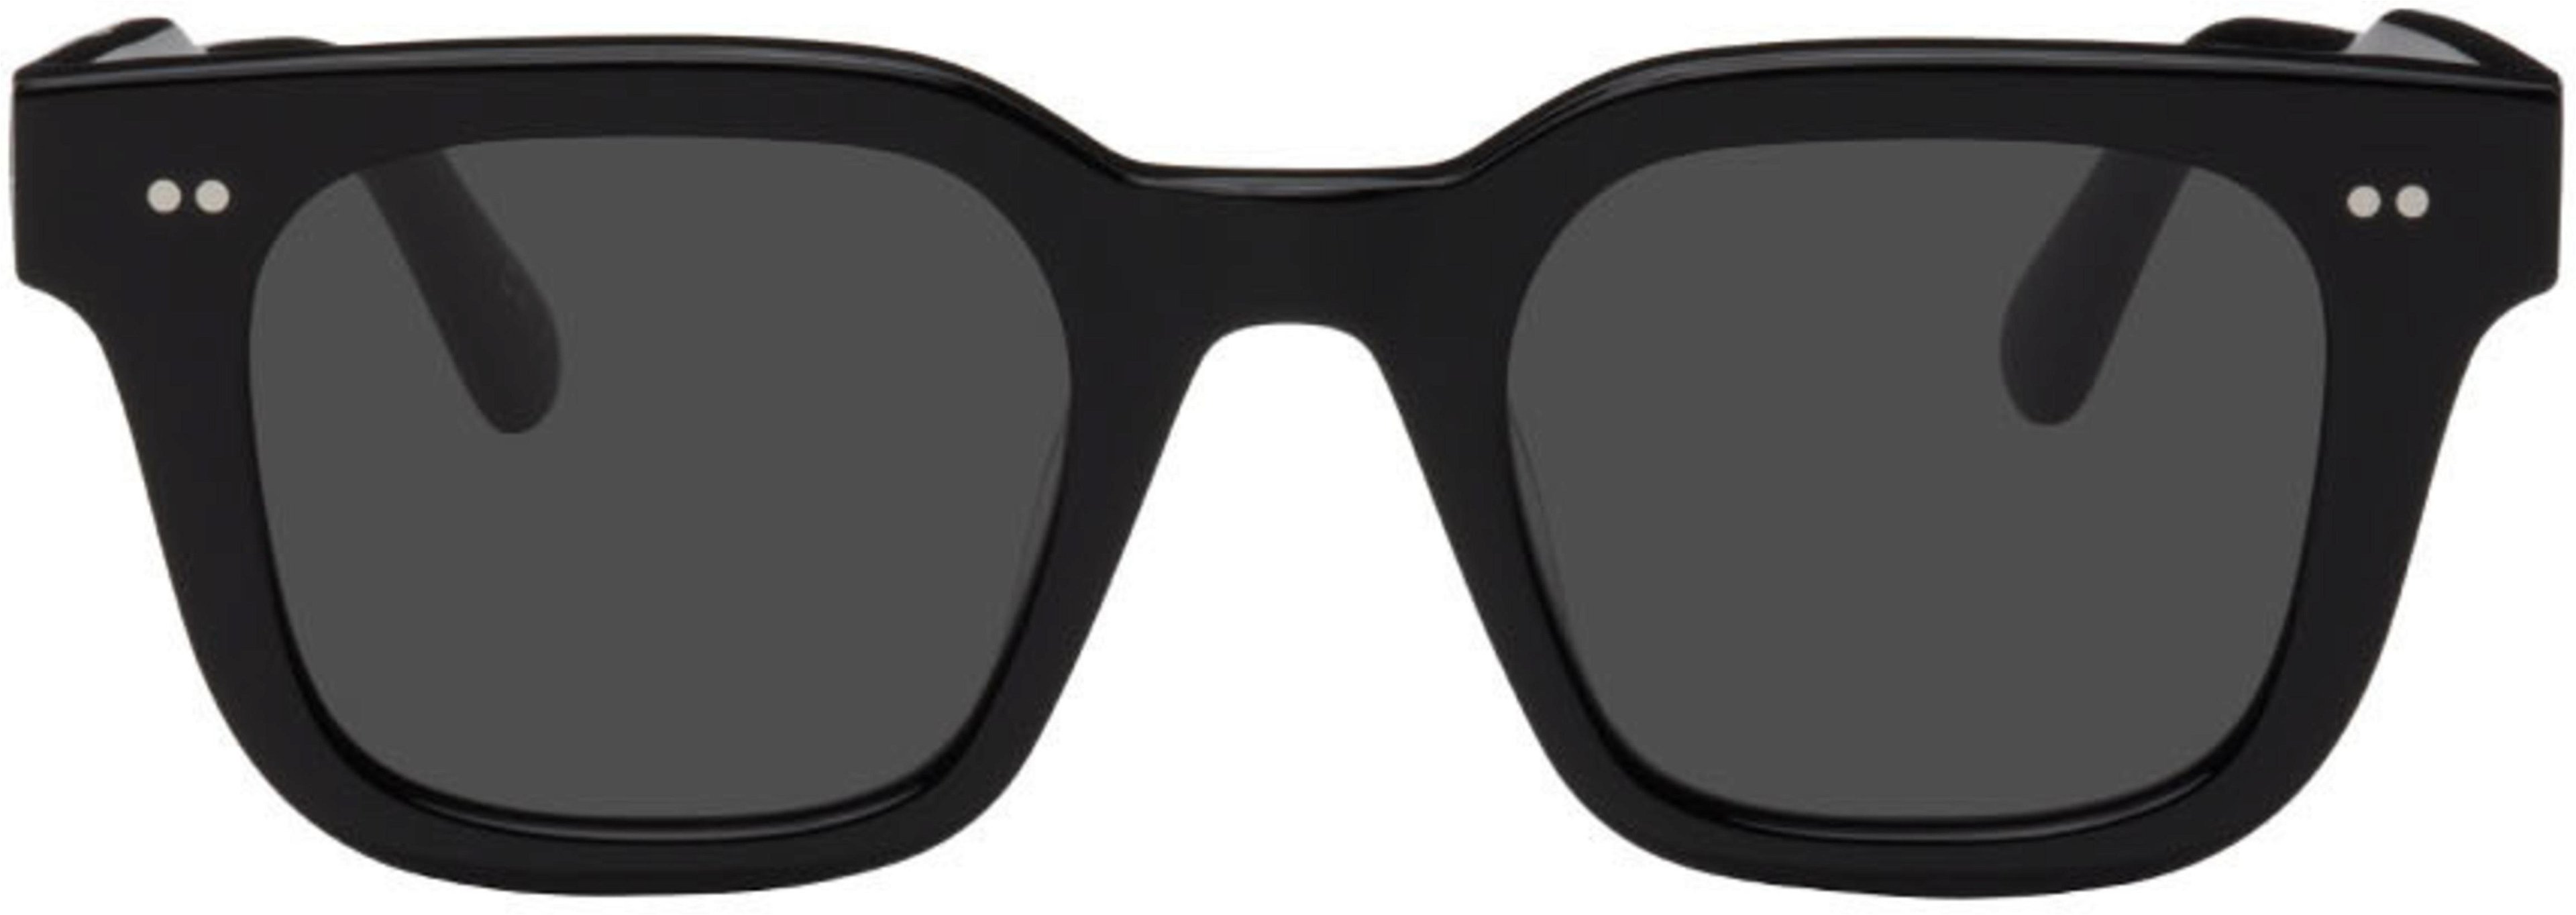 Black 04 Sunglasses by CHIMI